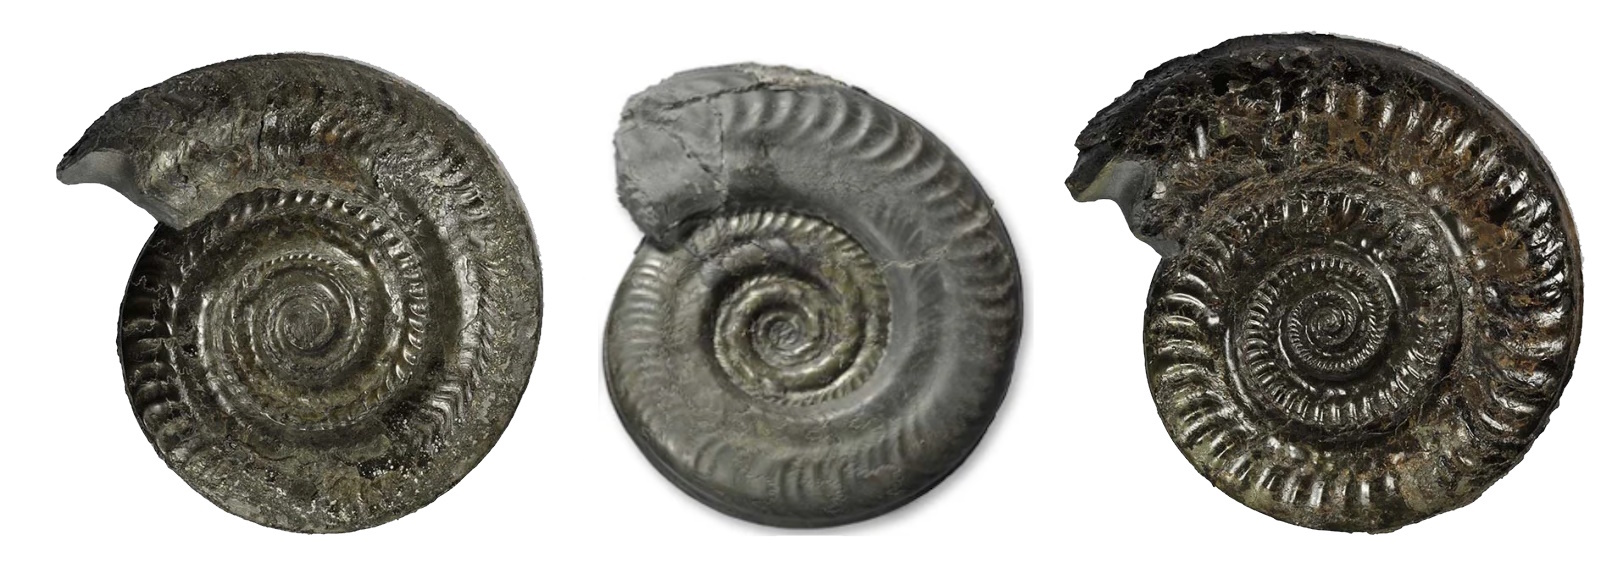 Whitby's Ammonites